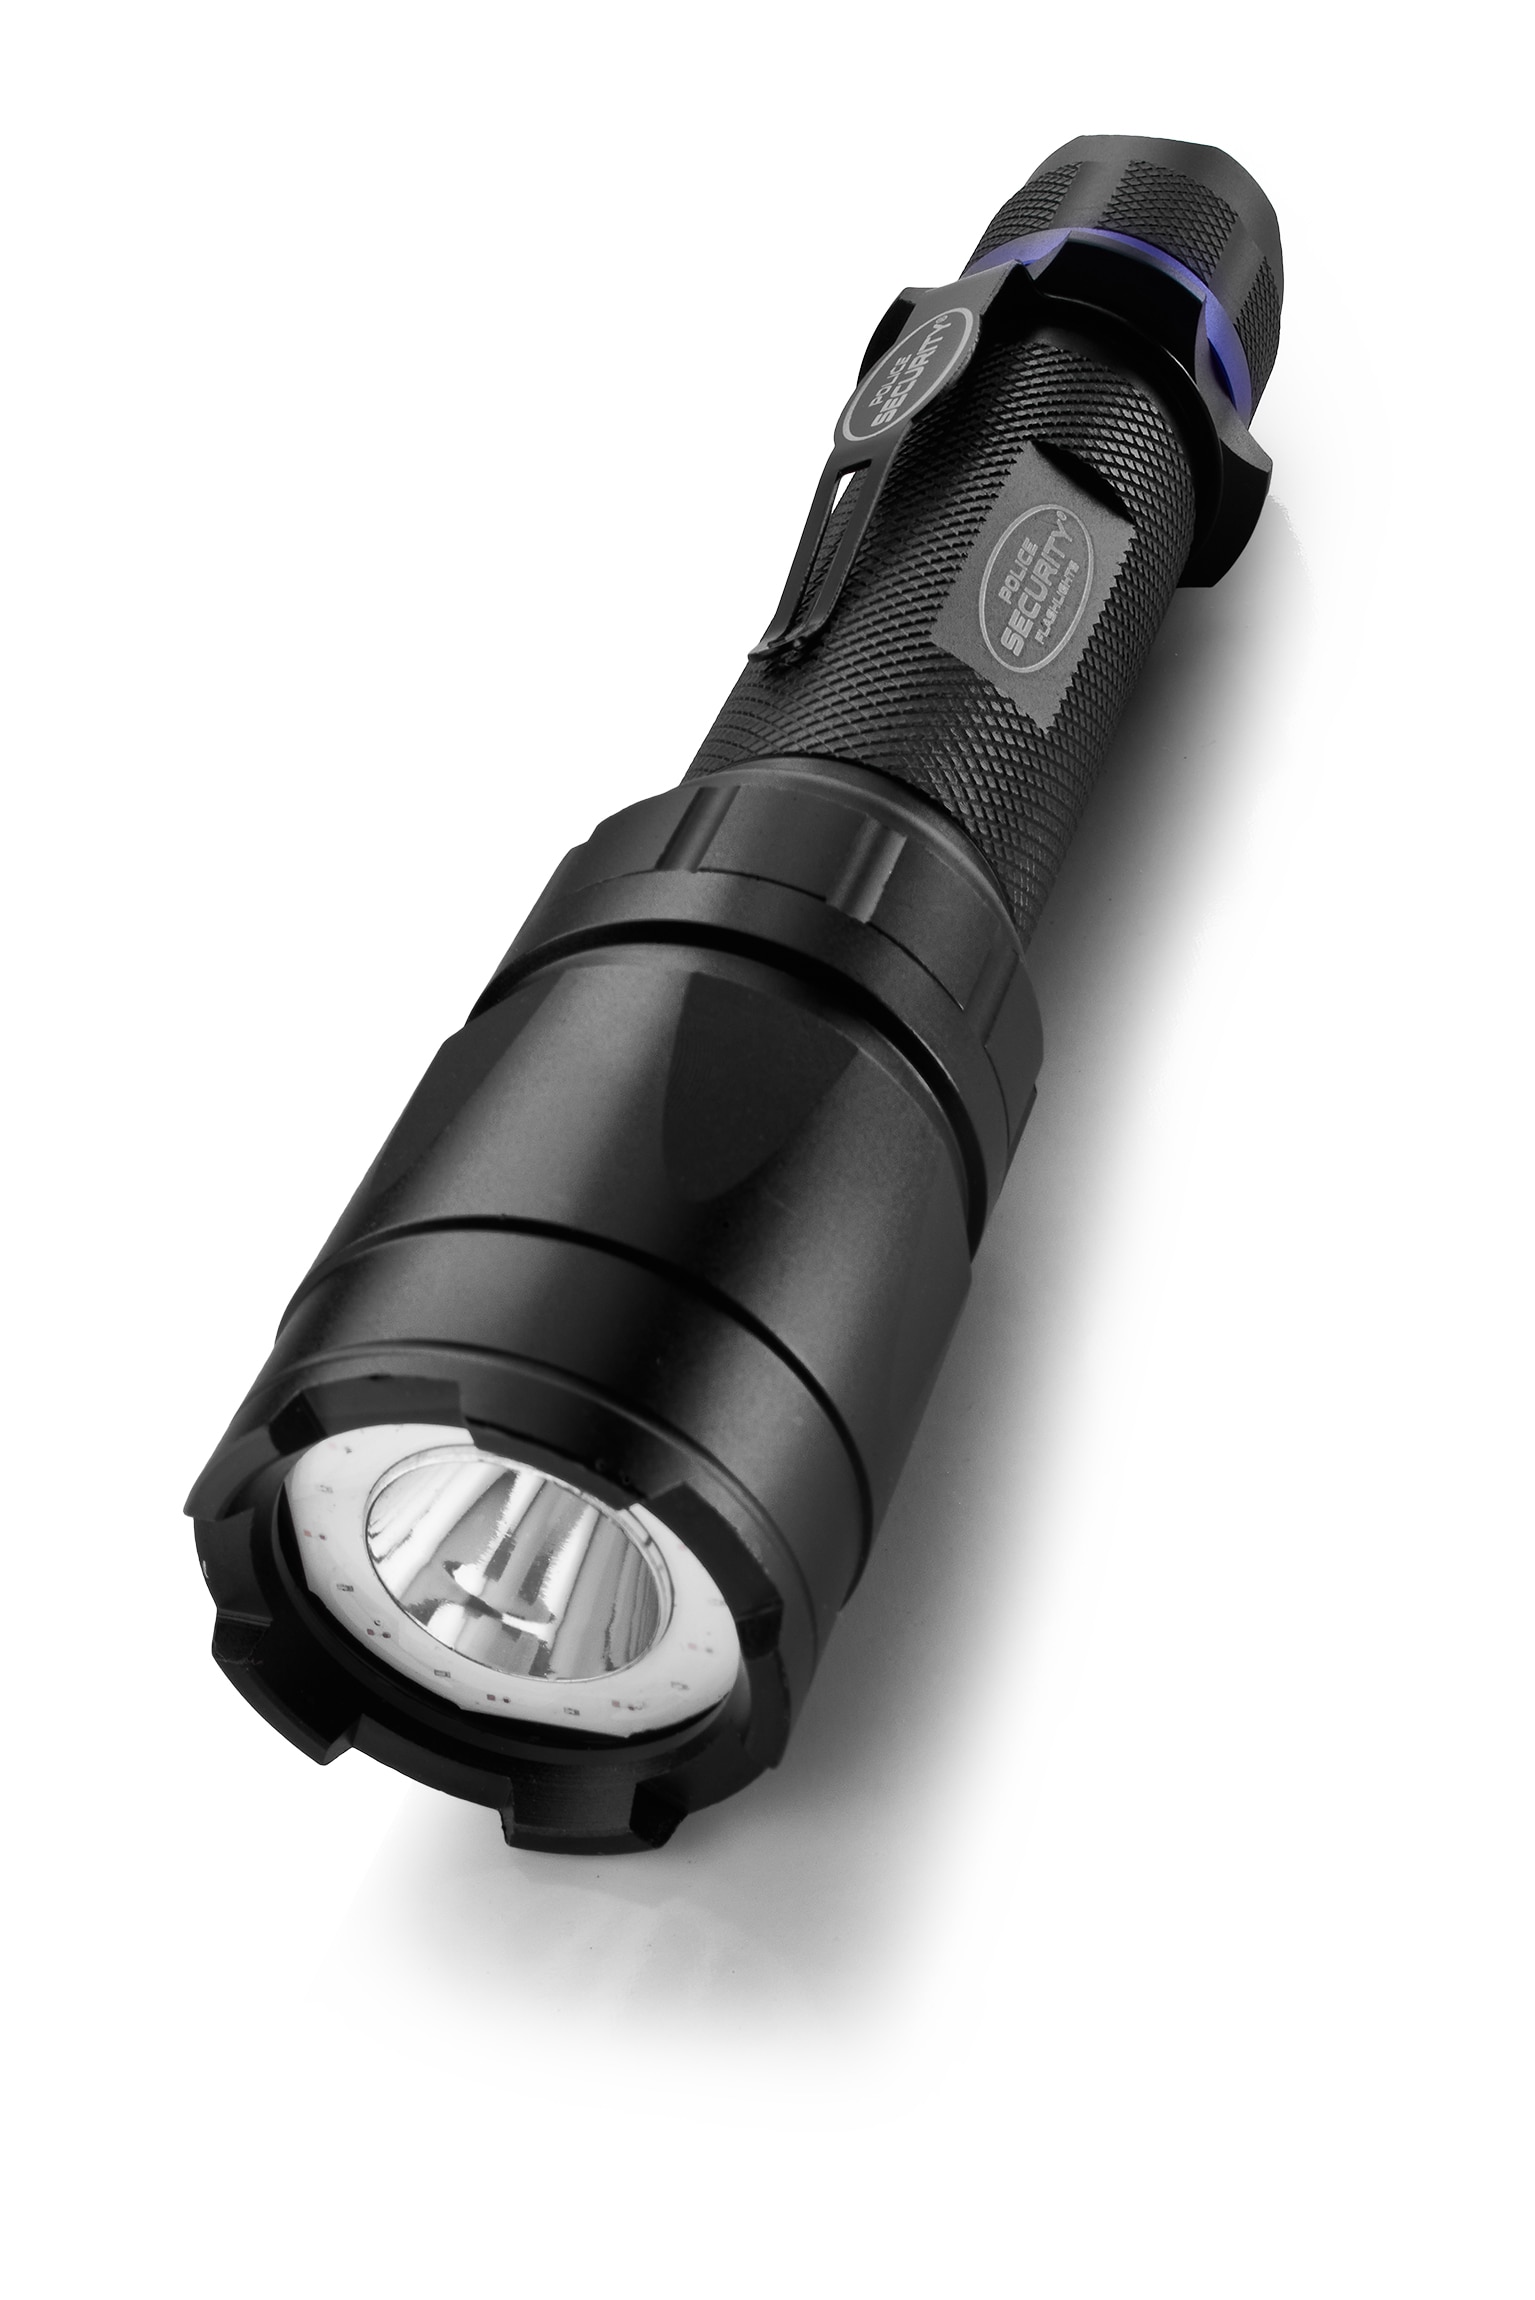 Police Security Flashlights 1,000-Lumen LED Rechargeable Flashlight, 2 pk.